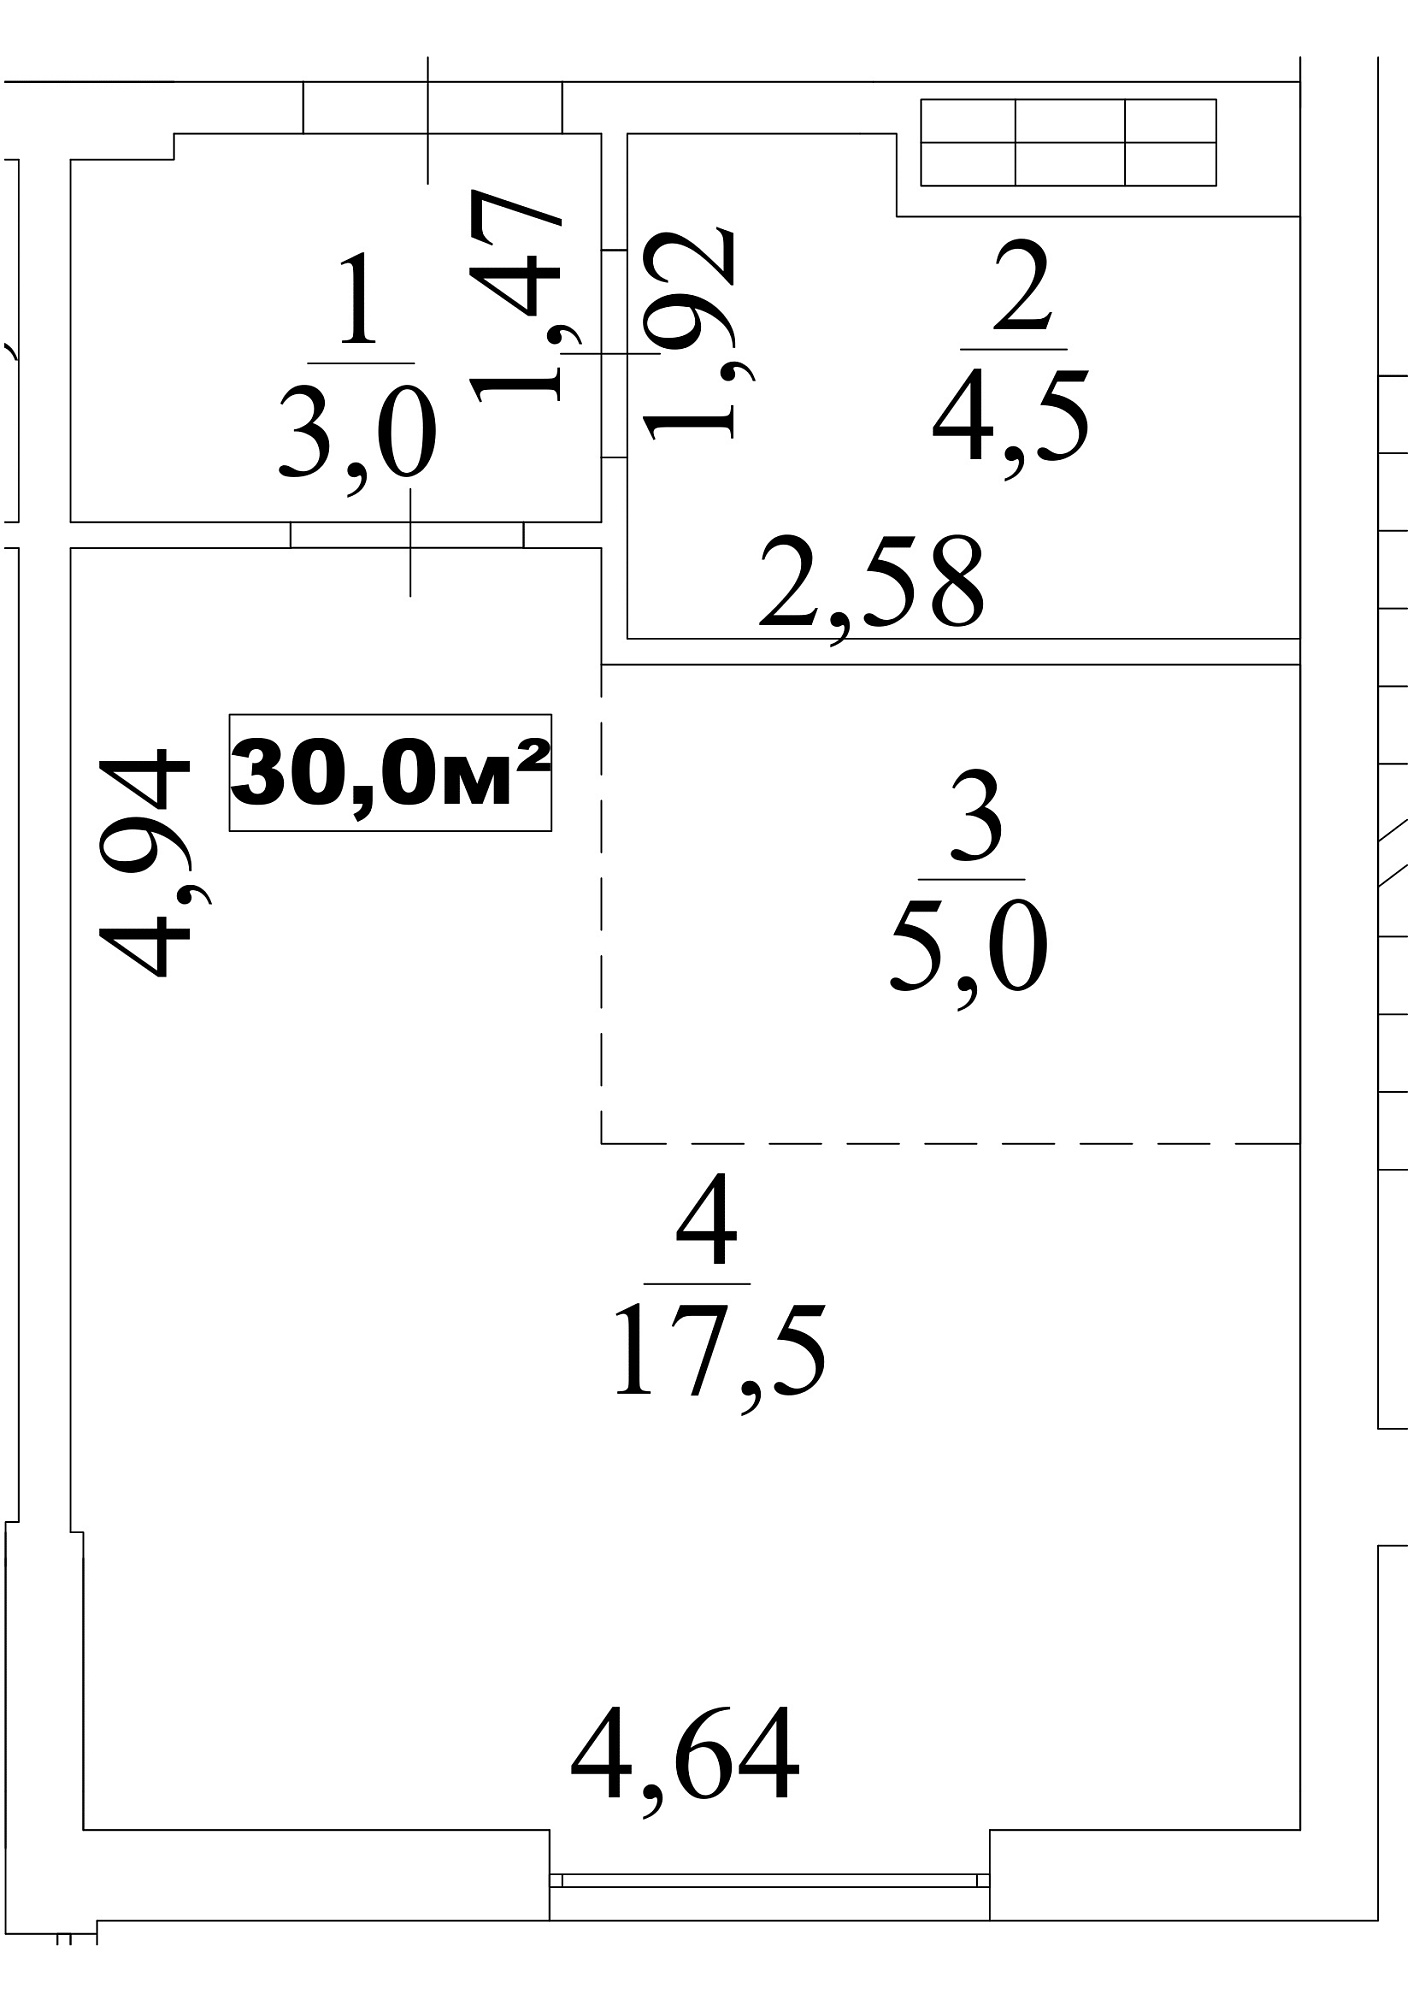 Planning Smart flats area 30m2, AB-10-05/0037а.